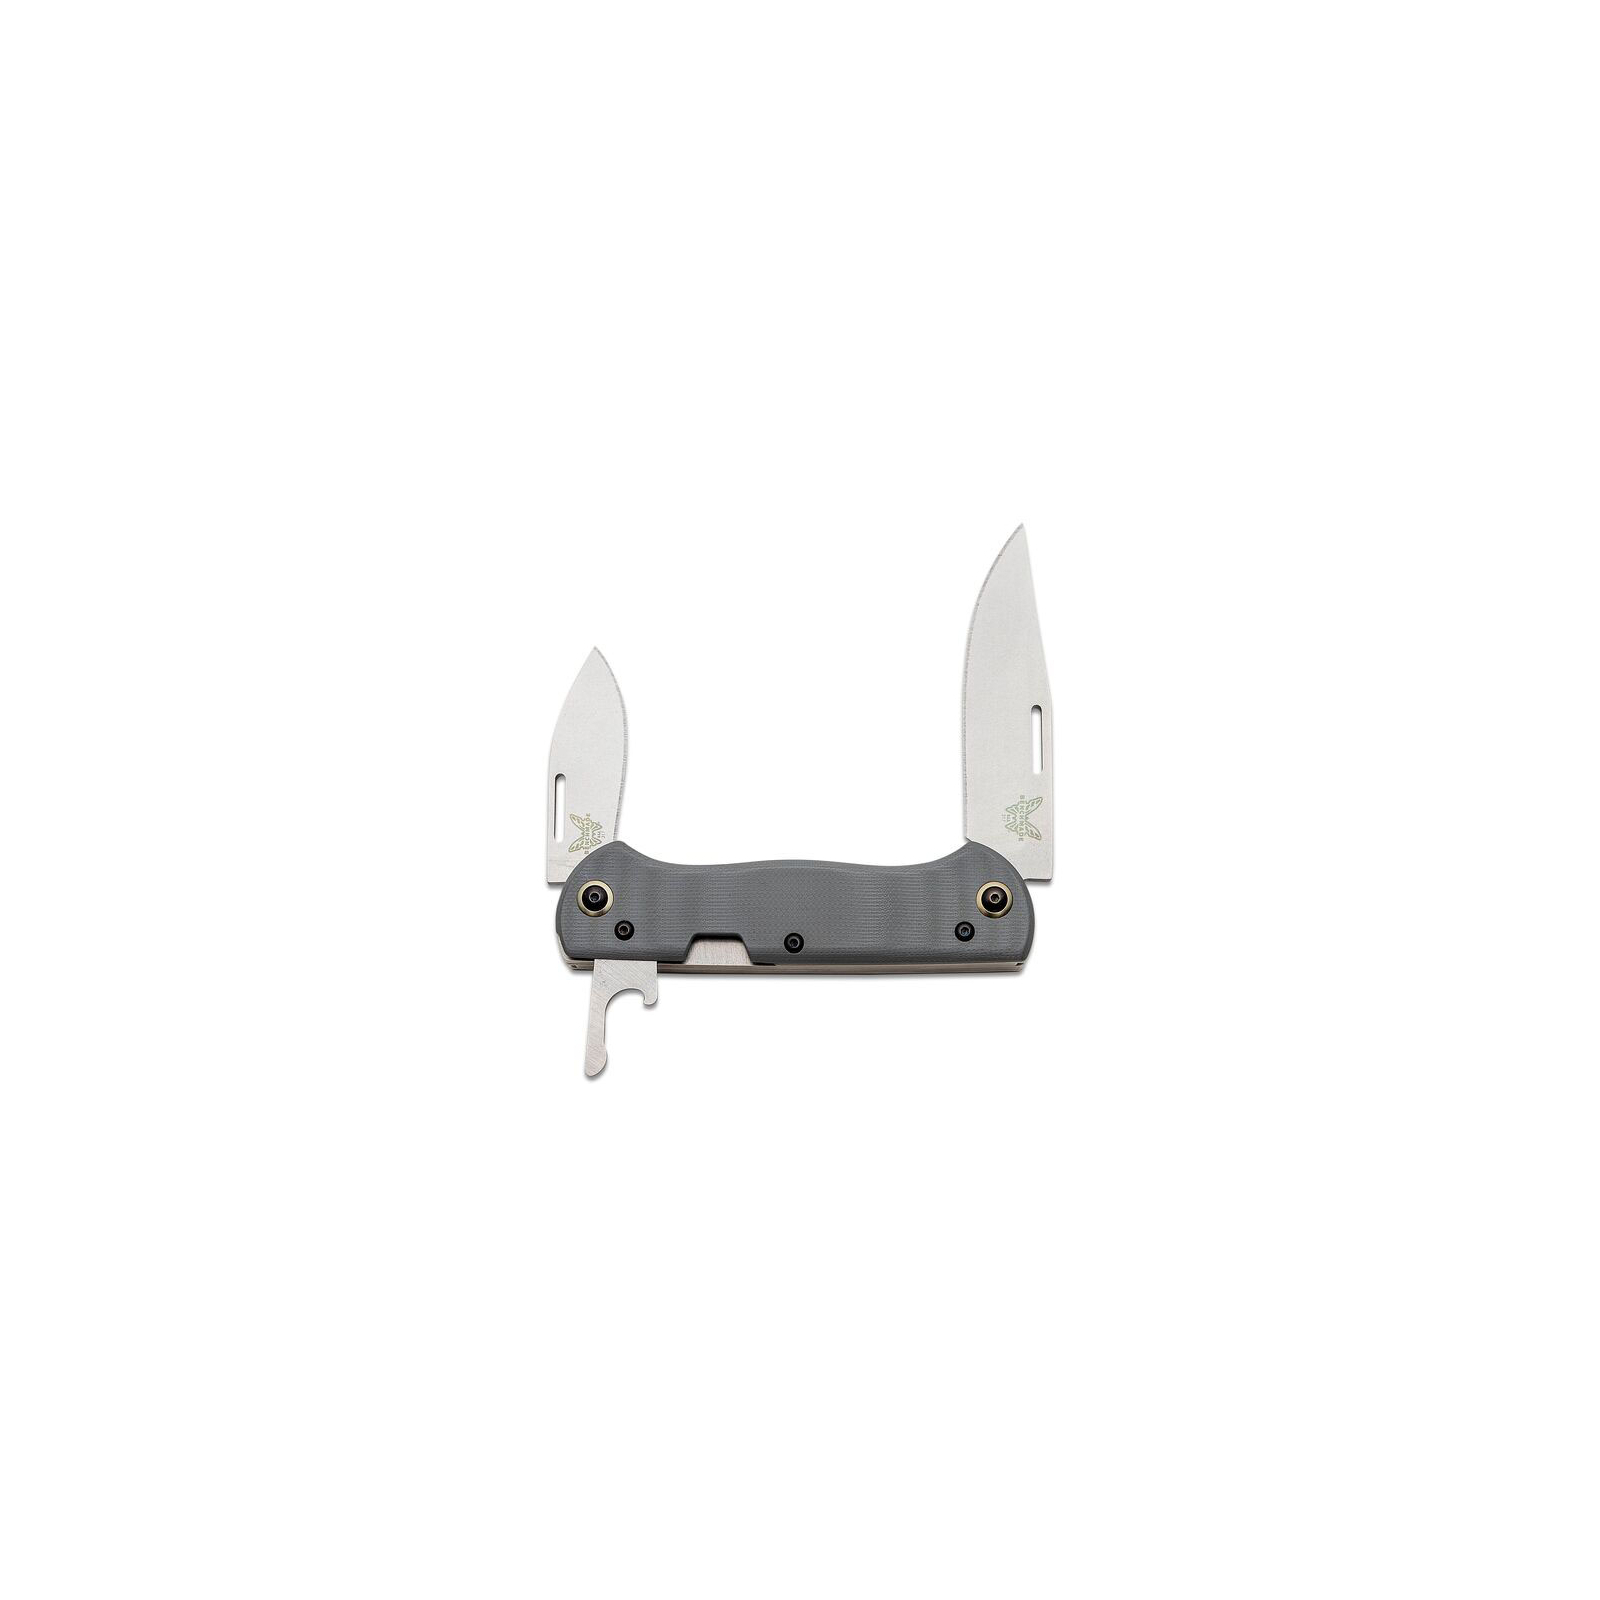 Нож Benchmade Weekender Grey (317)